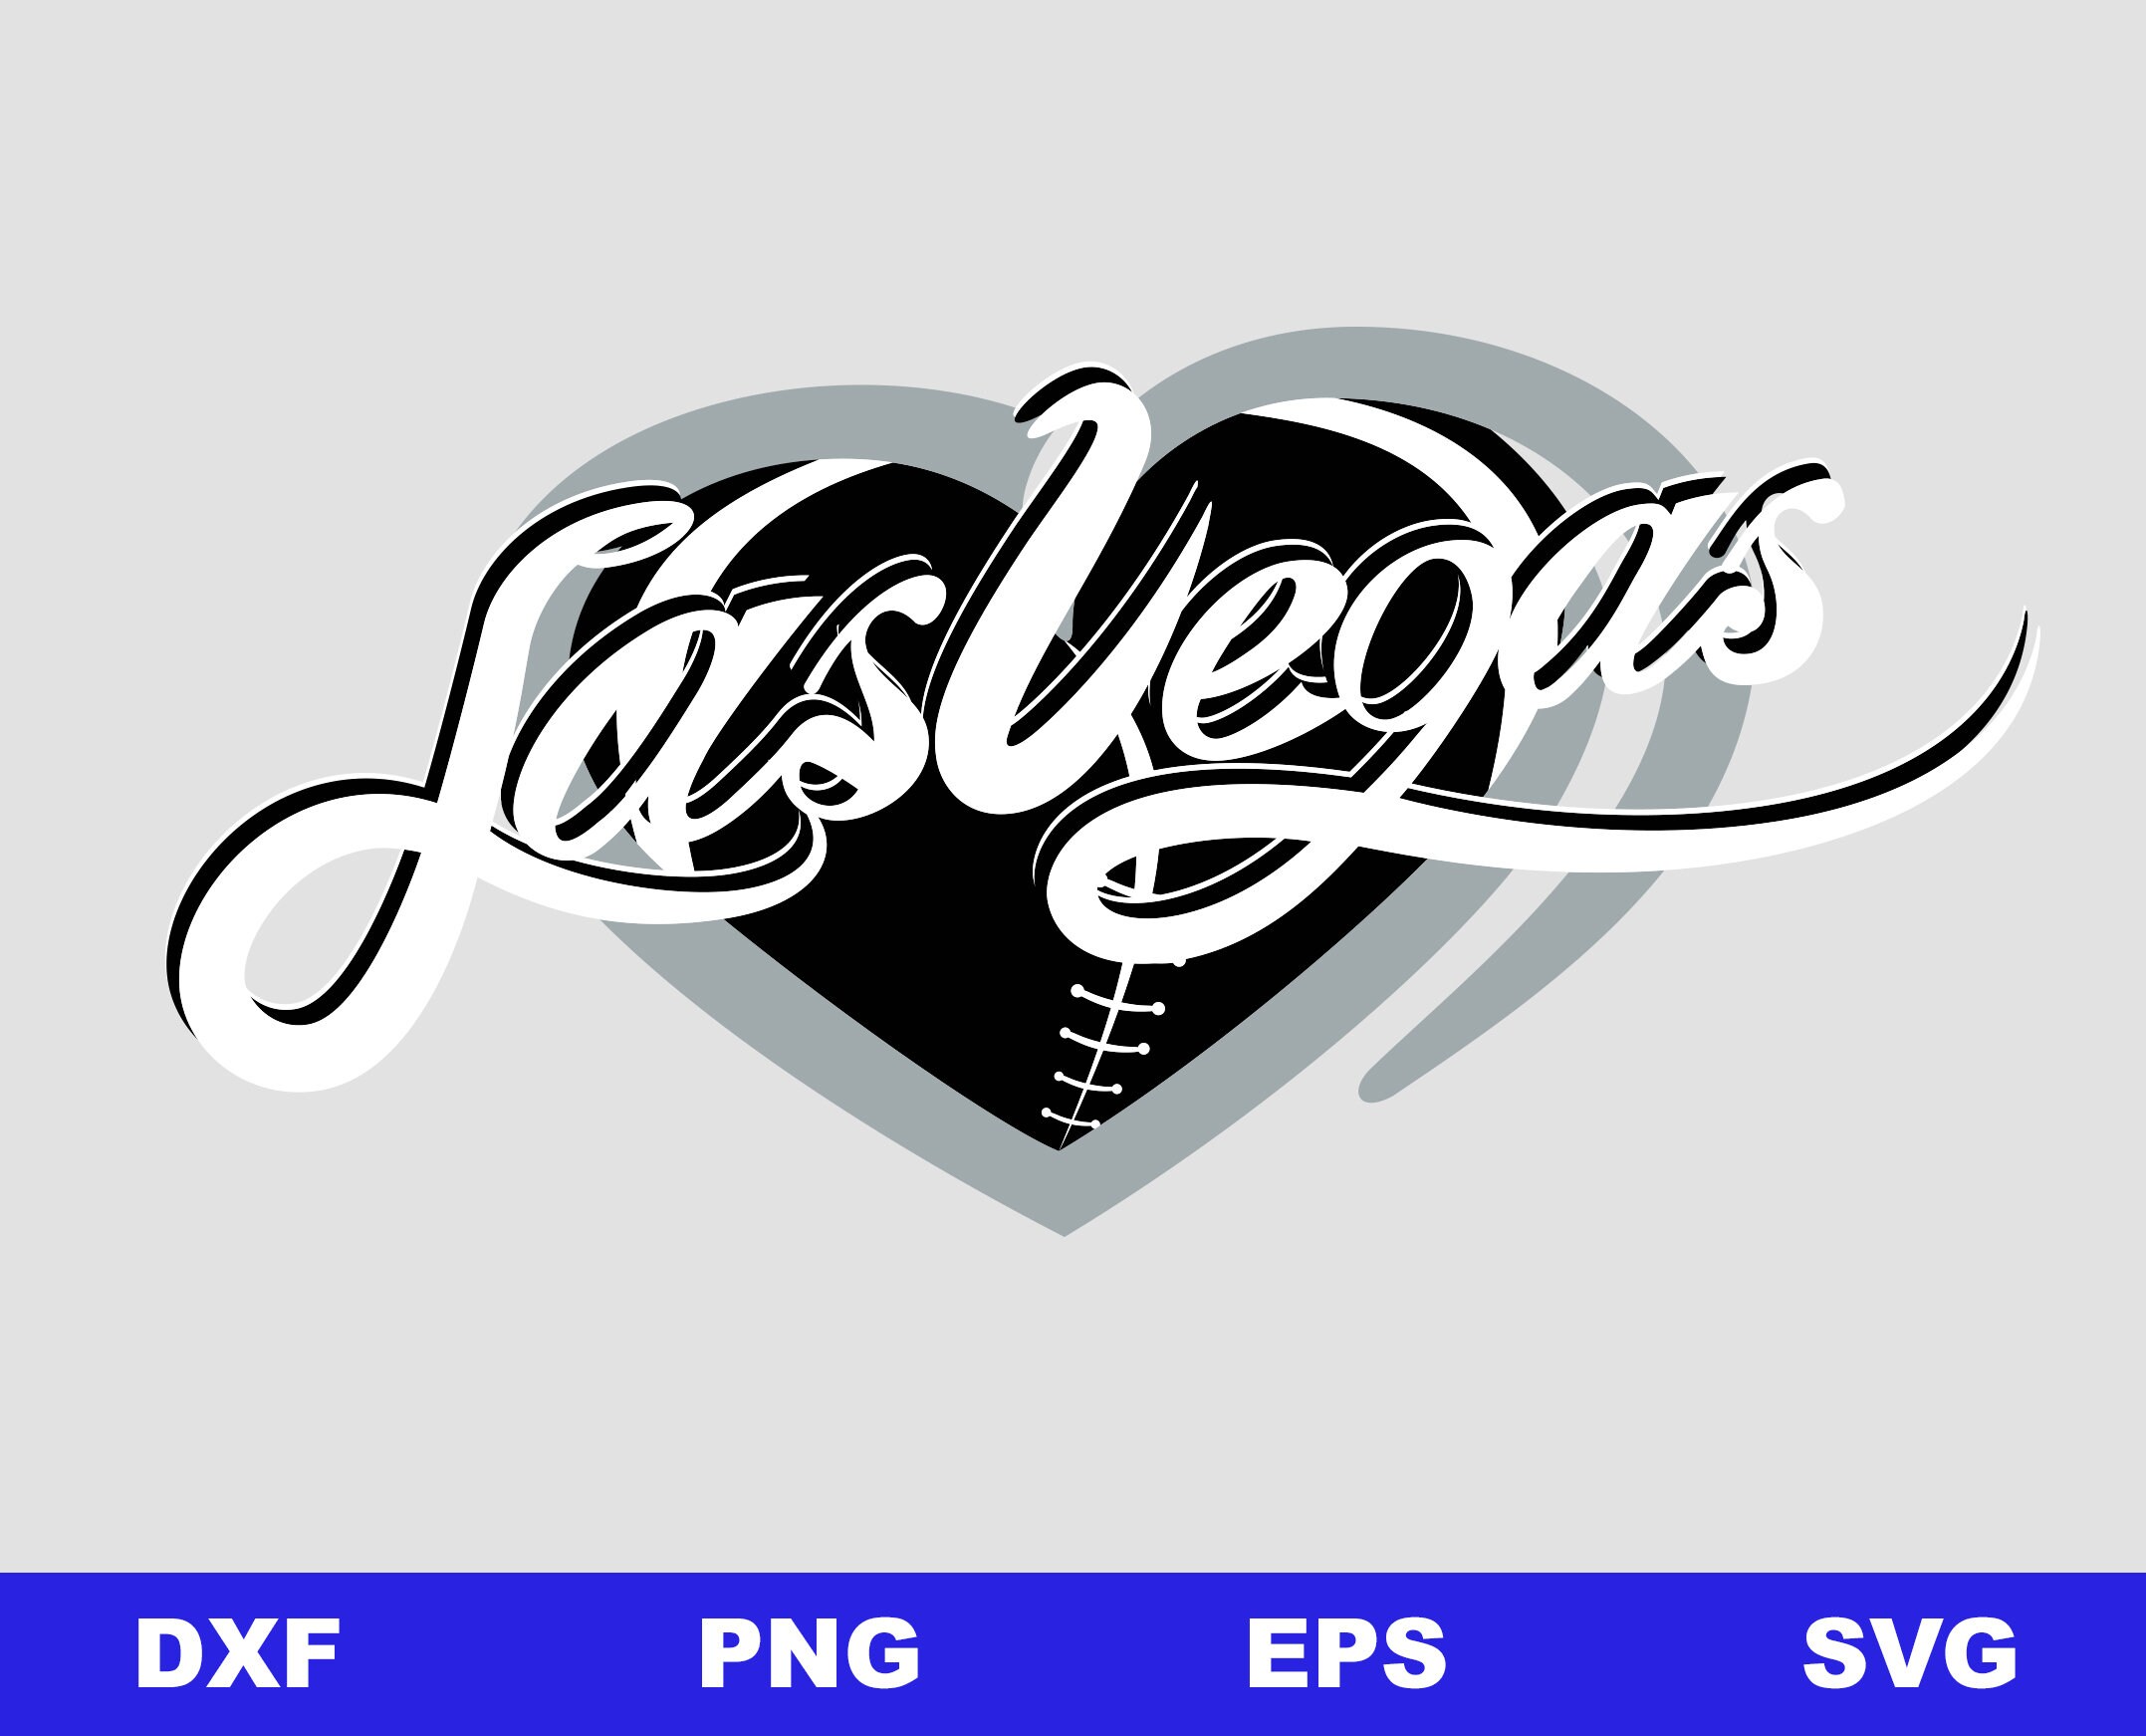 Las Vegas Outlaws Vector Logo - Download Free SVG Icon